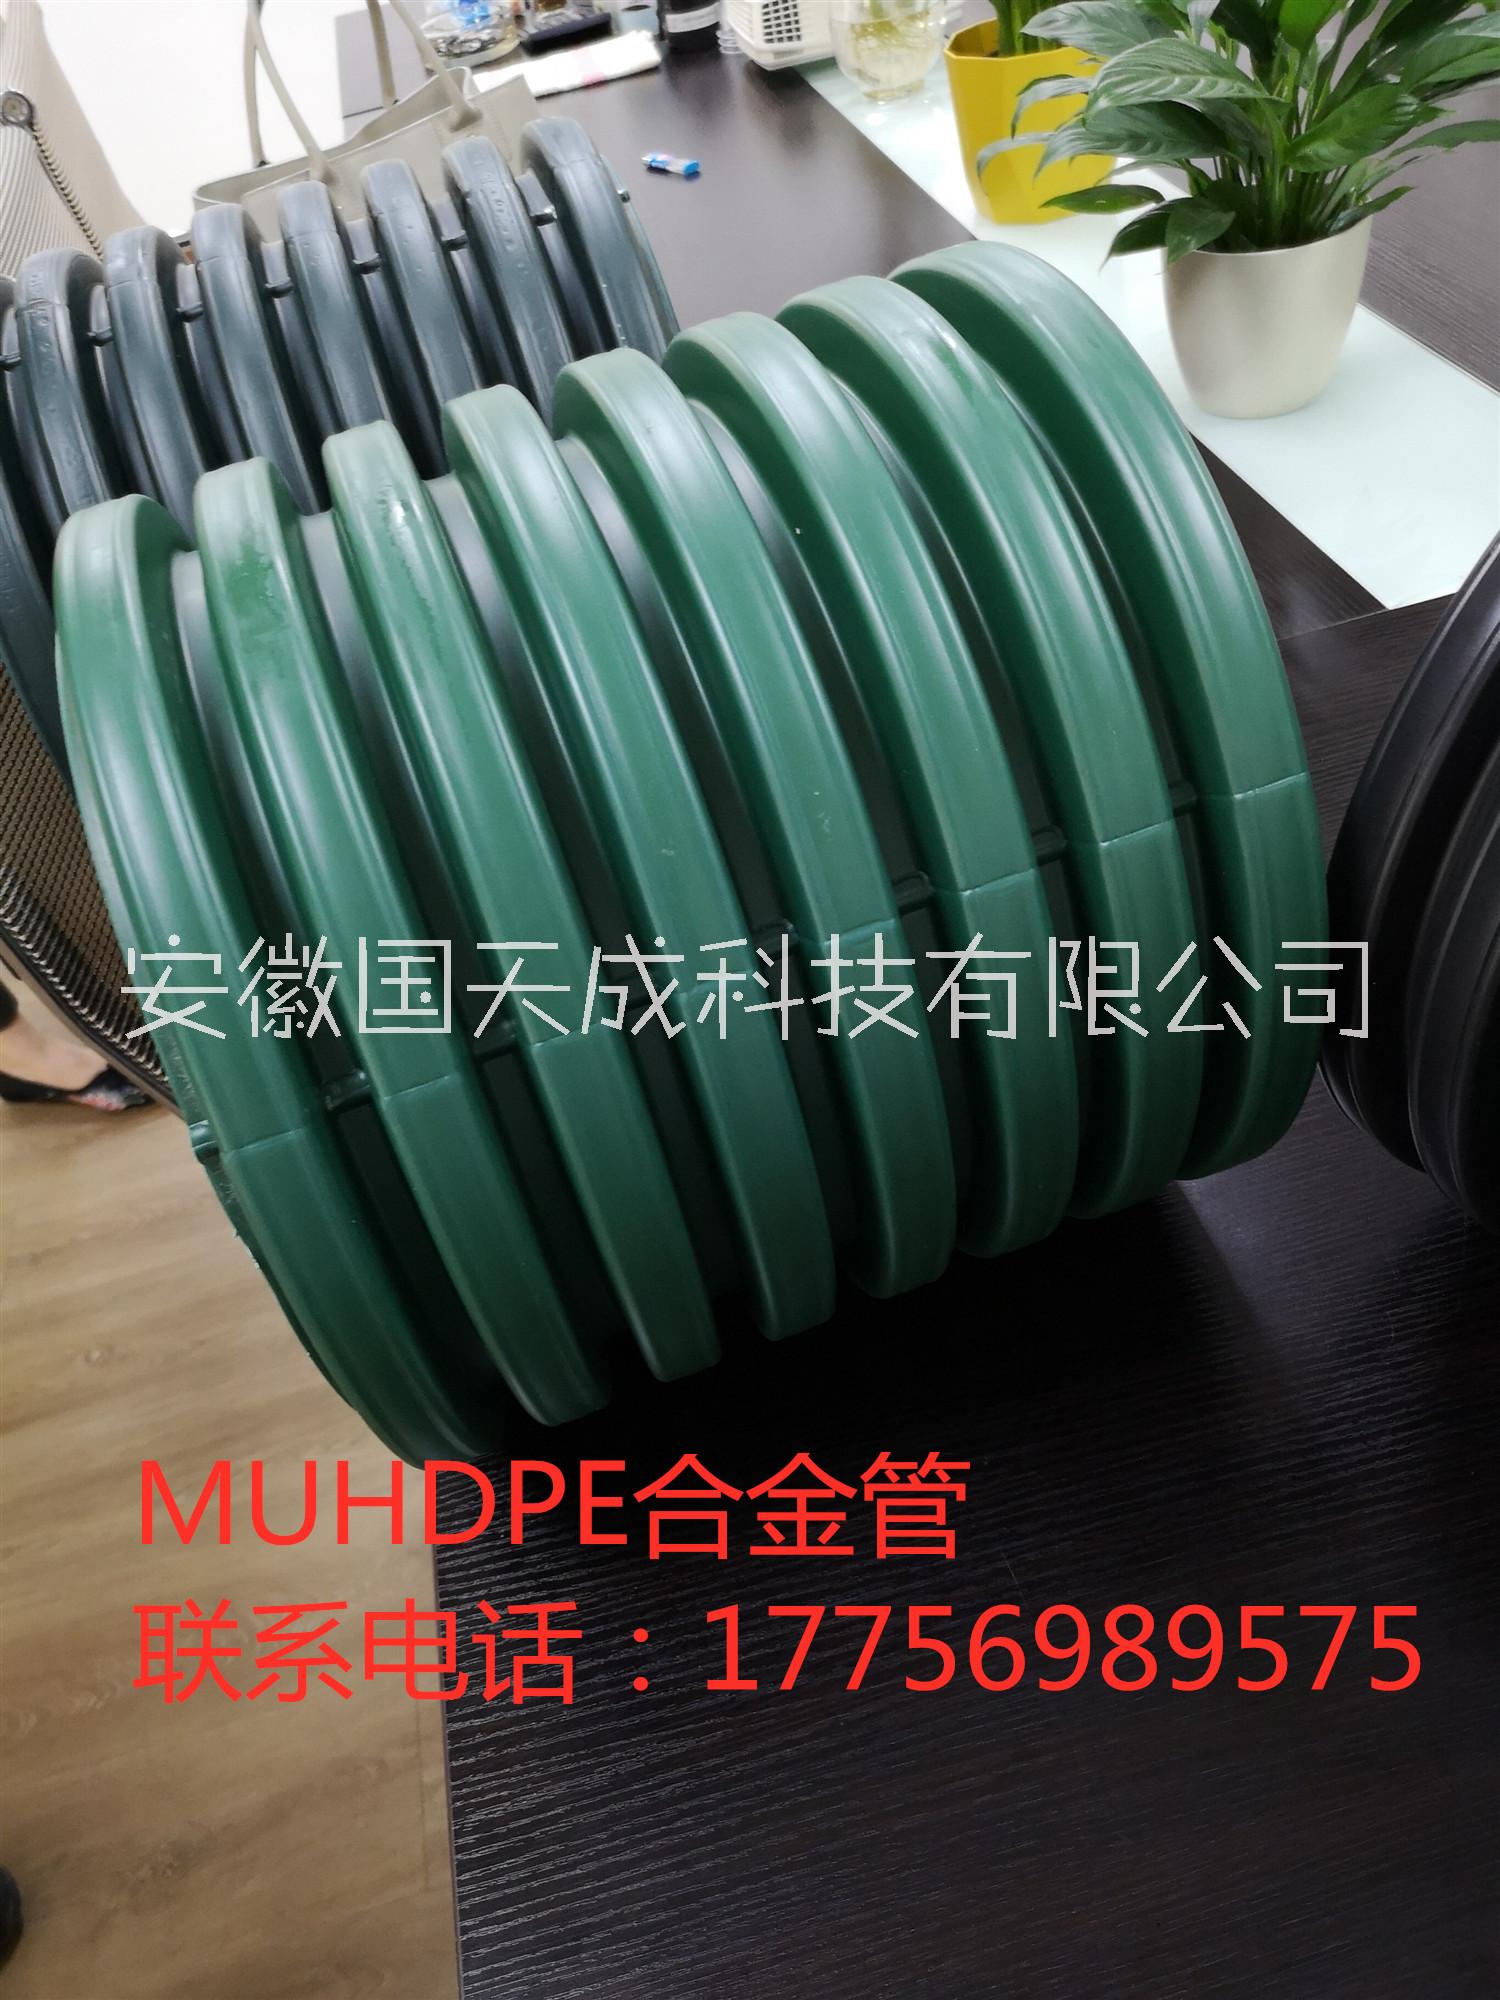 dn400MUHDPE合金管/生产厂家/价格 dn400MUHDPE合金管价格